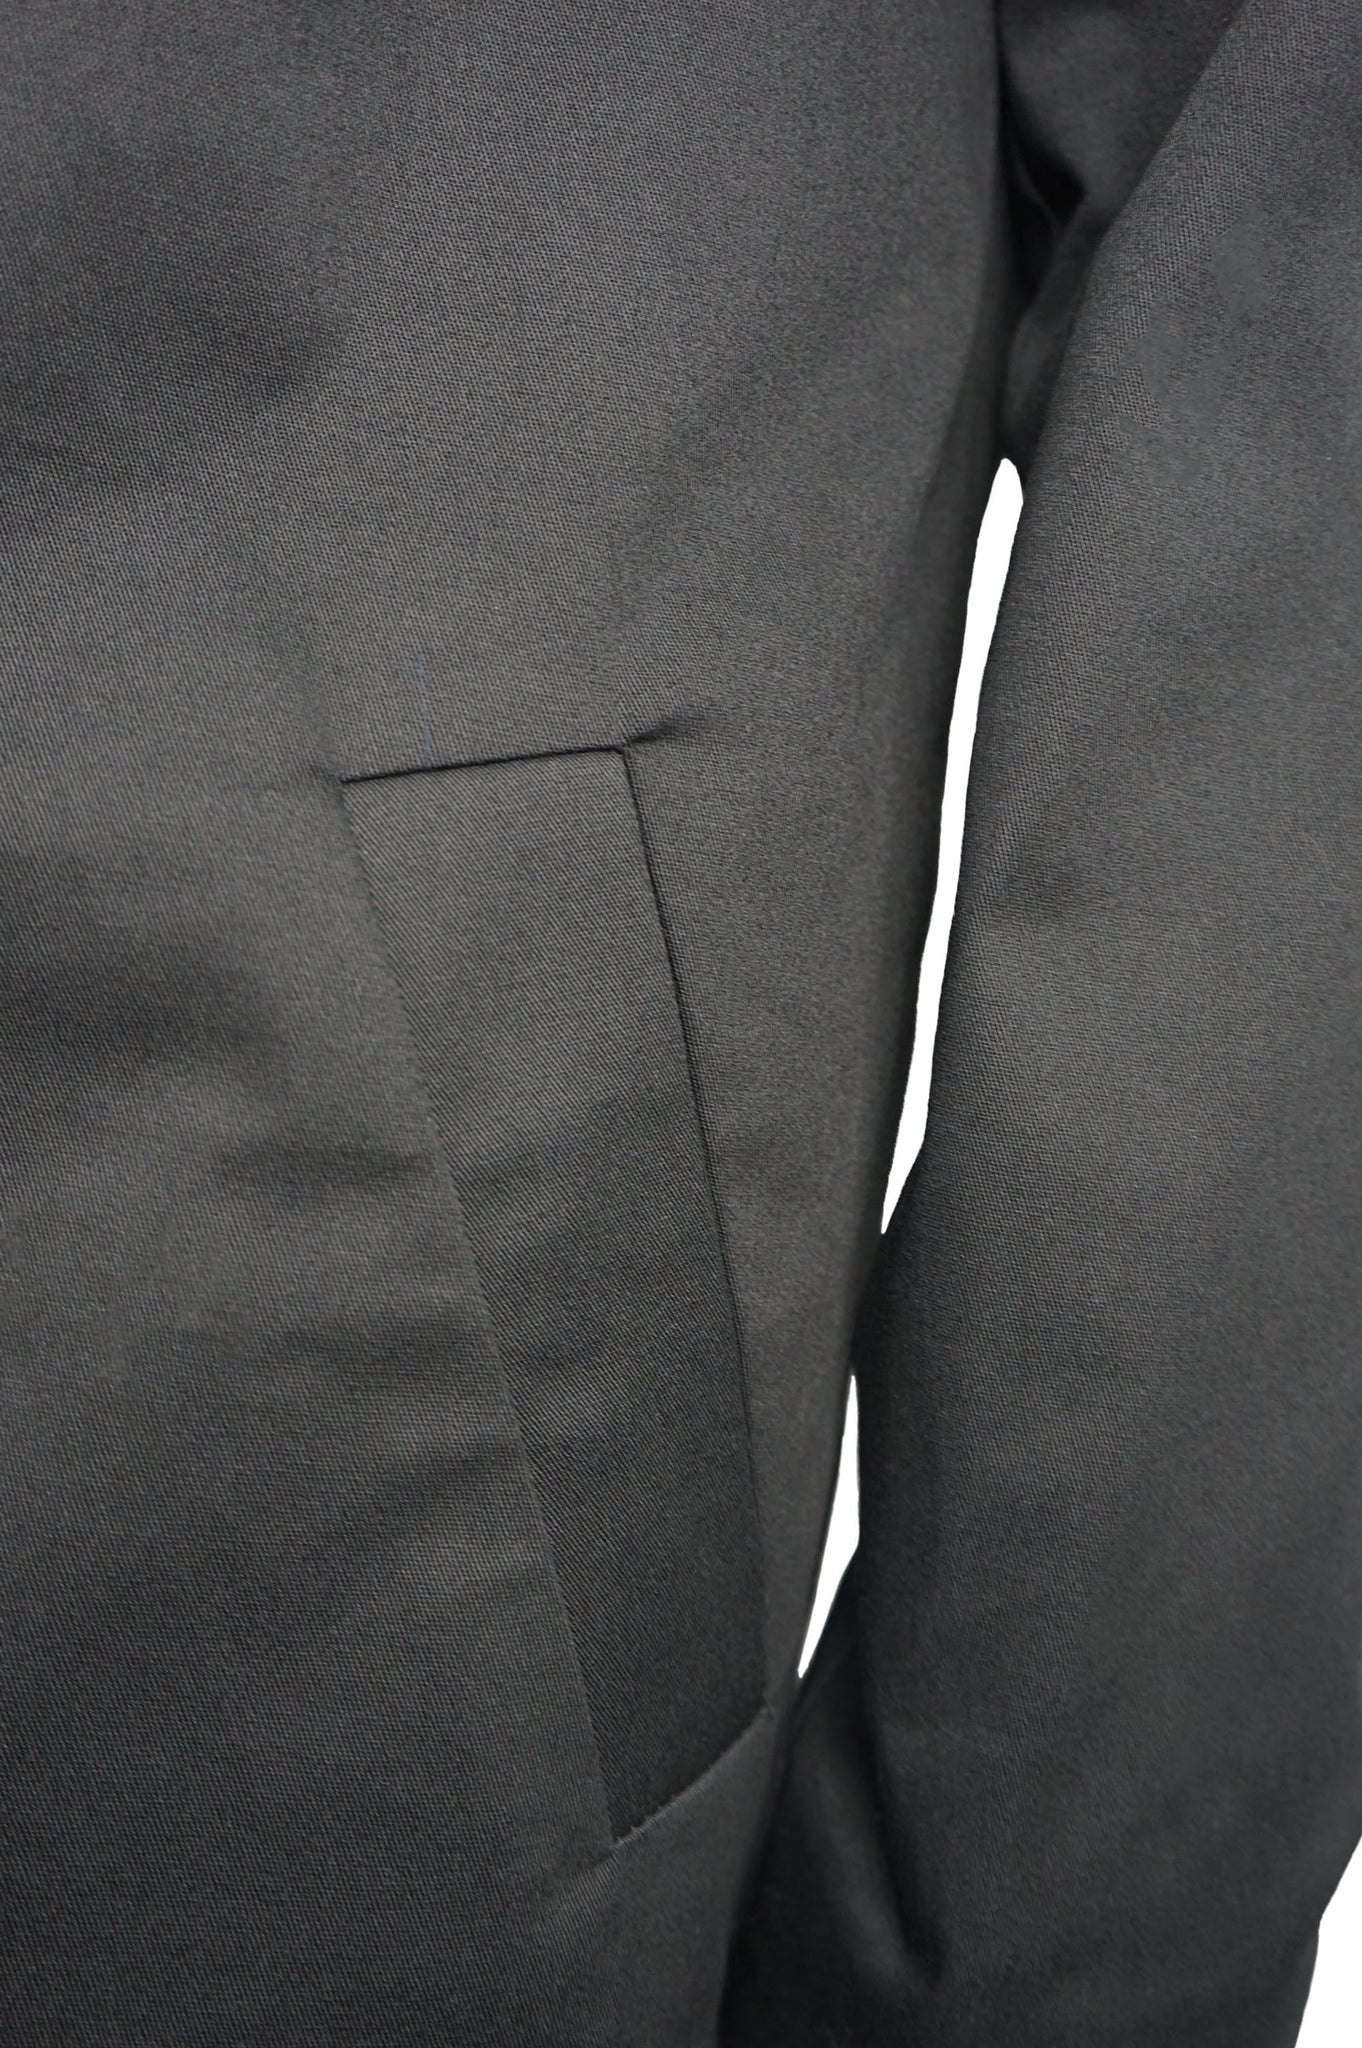 adddress MG17 asymmetrische Jacke